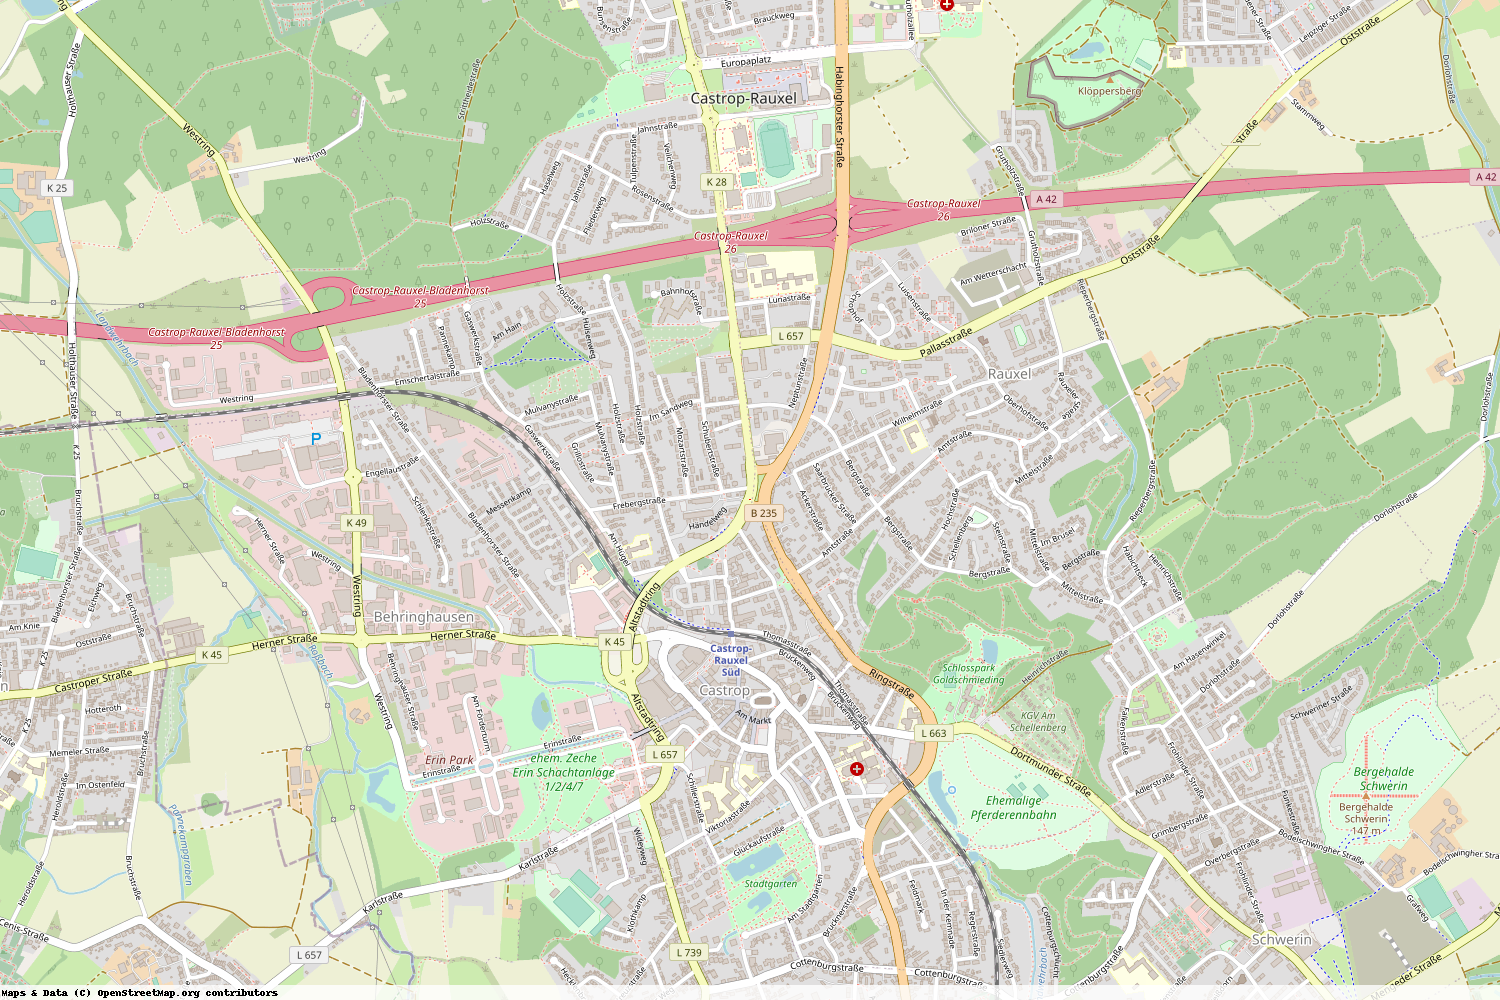 Ist gerade Stromausfall in Nordrhein-Westfalen - Recklinghausen - Castrop-Rauxel?